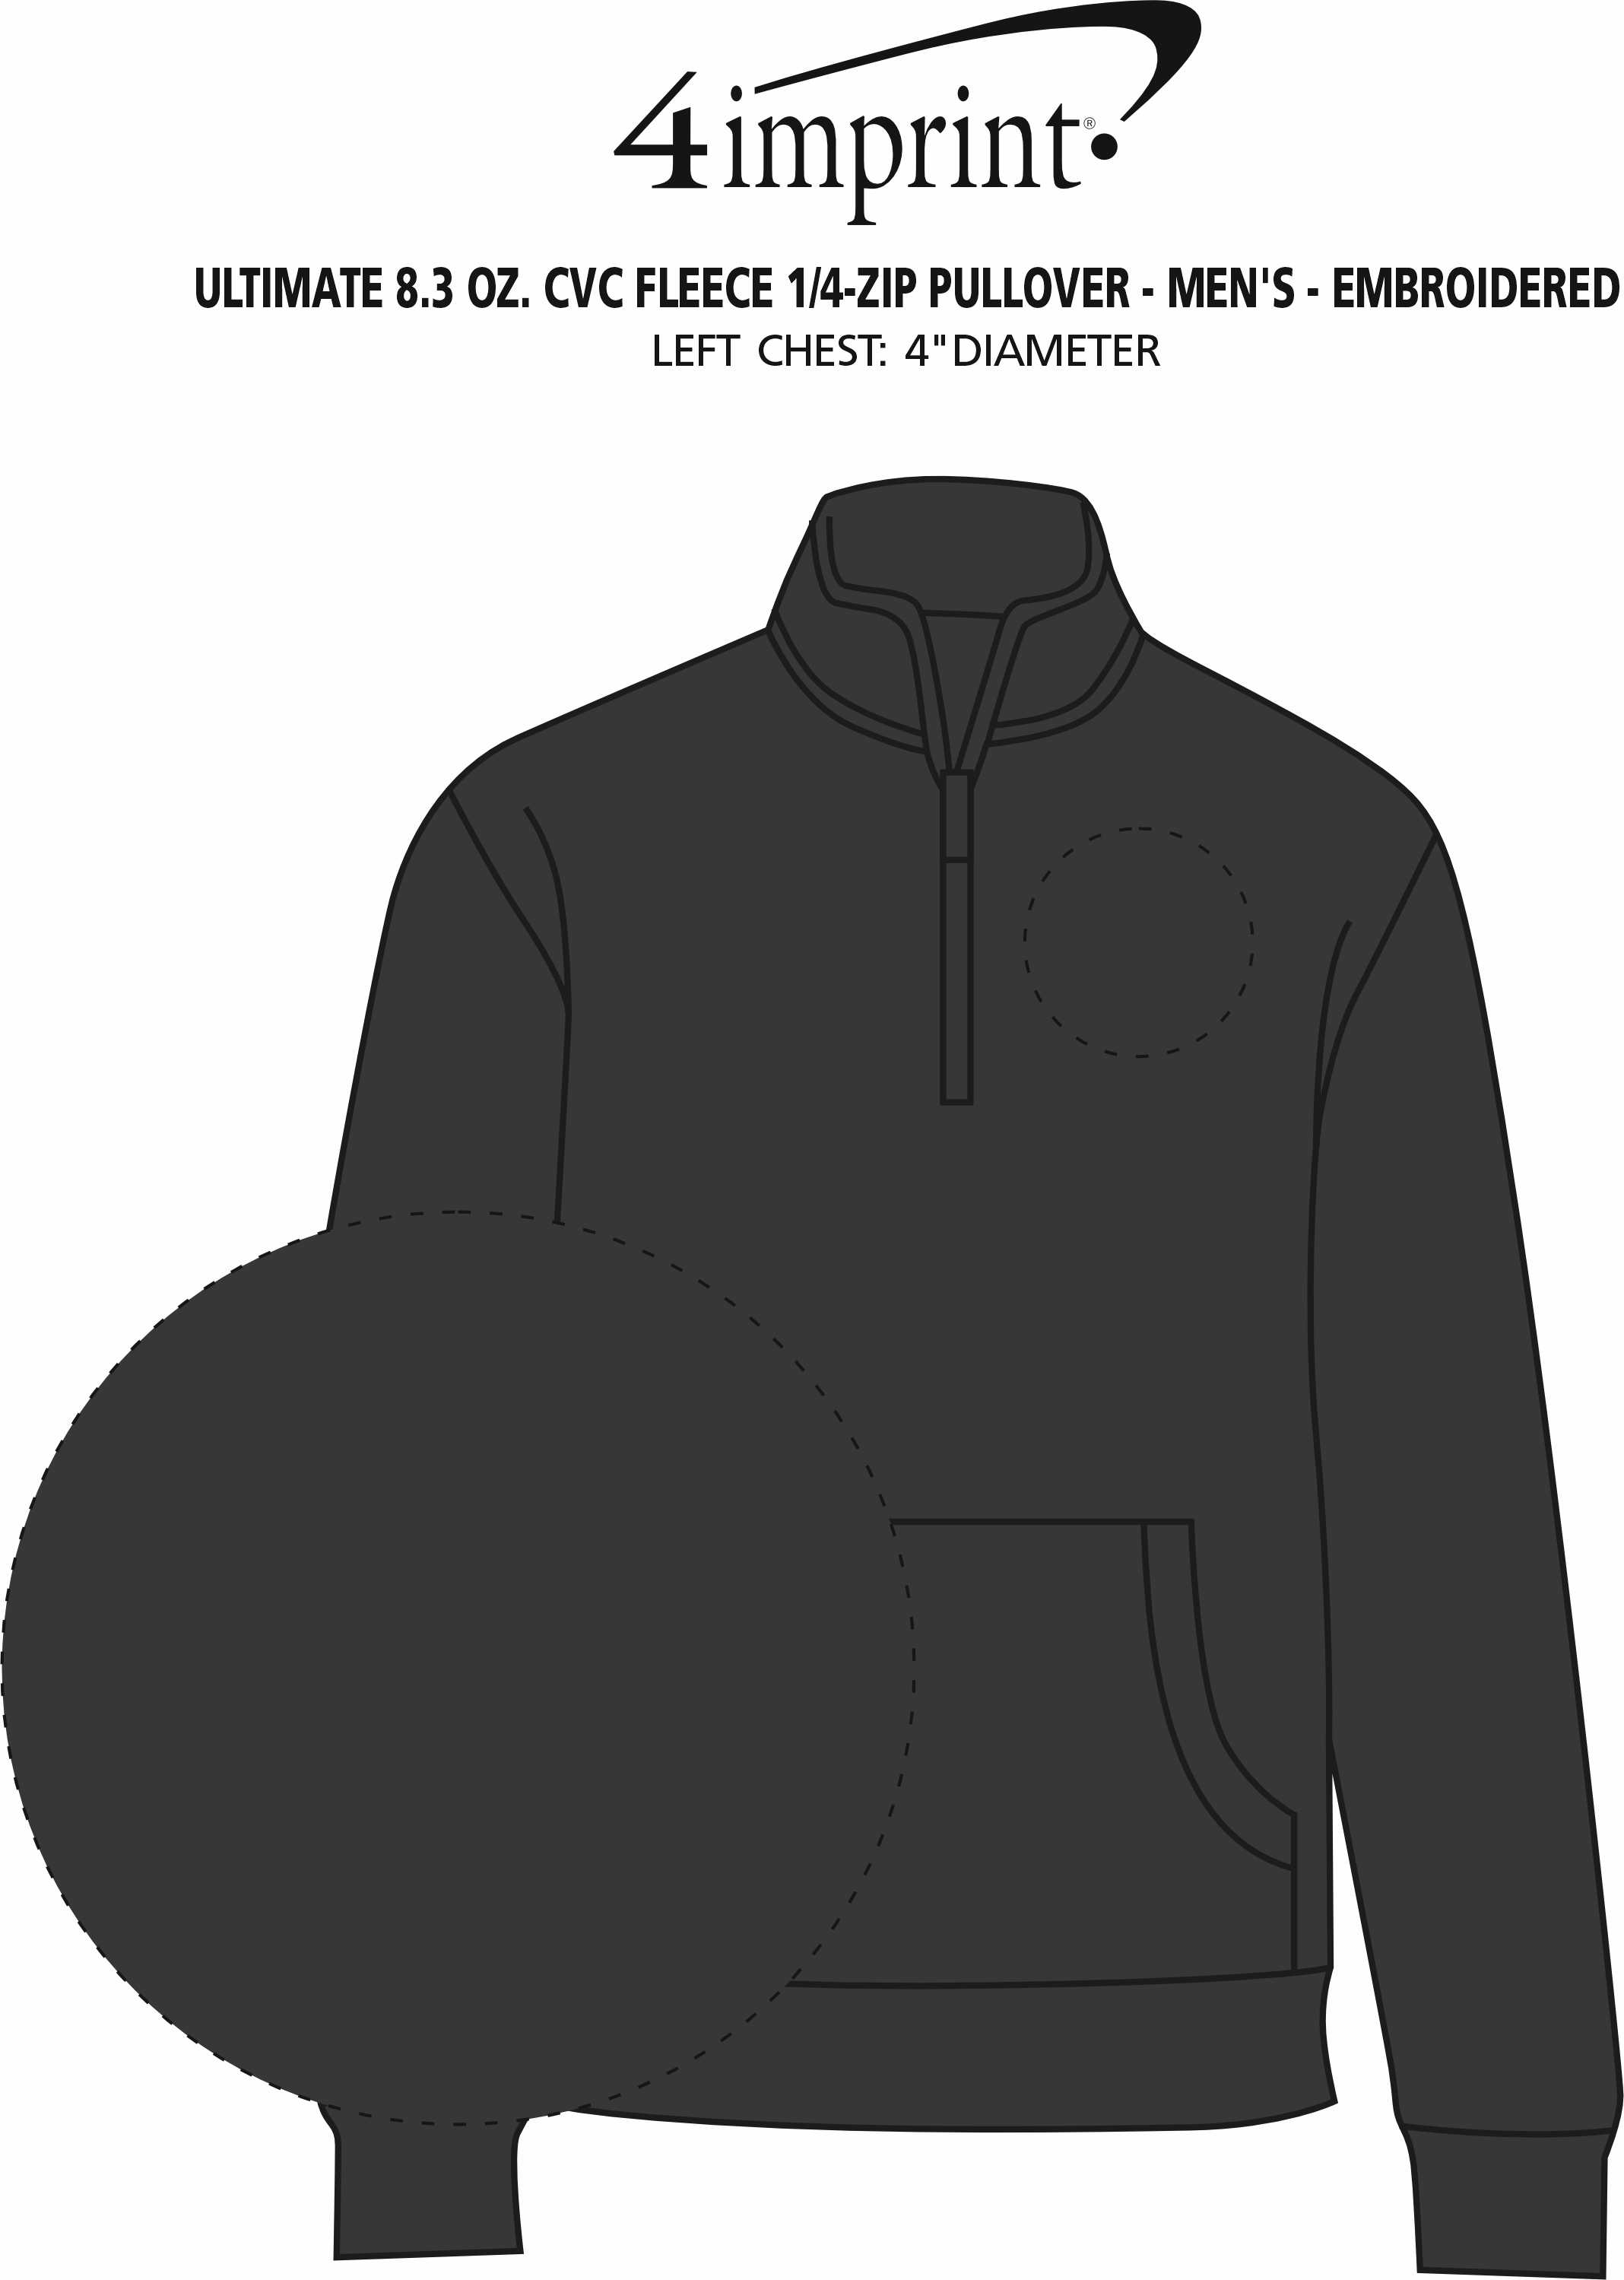 Imprint Area of Ultimate 8.3 oz. CVC Fleece 1/4-Zip Pullover - Men's - Embroidered